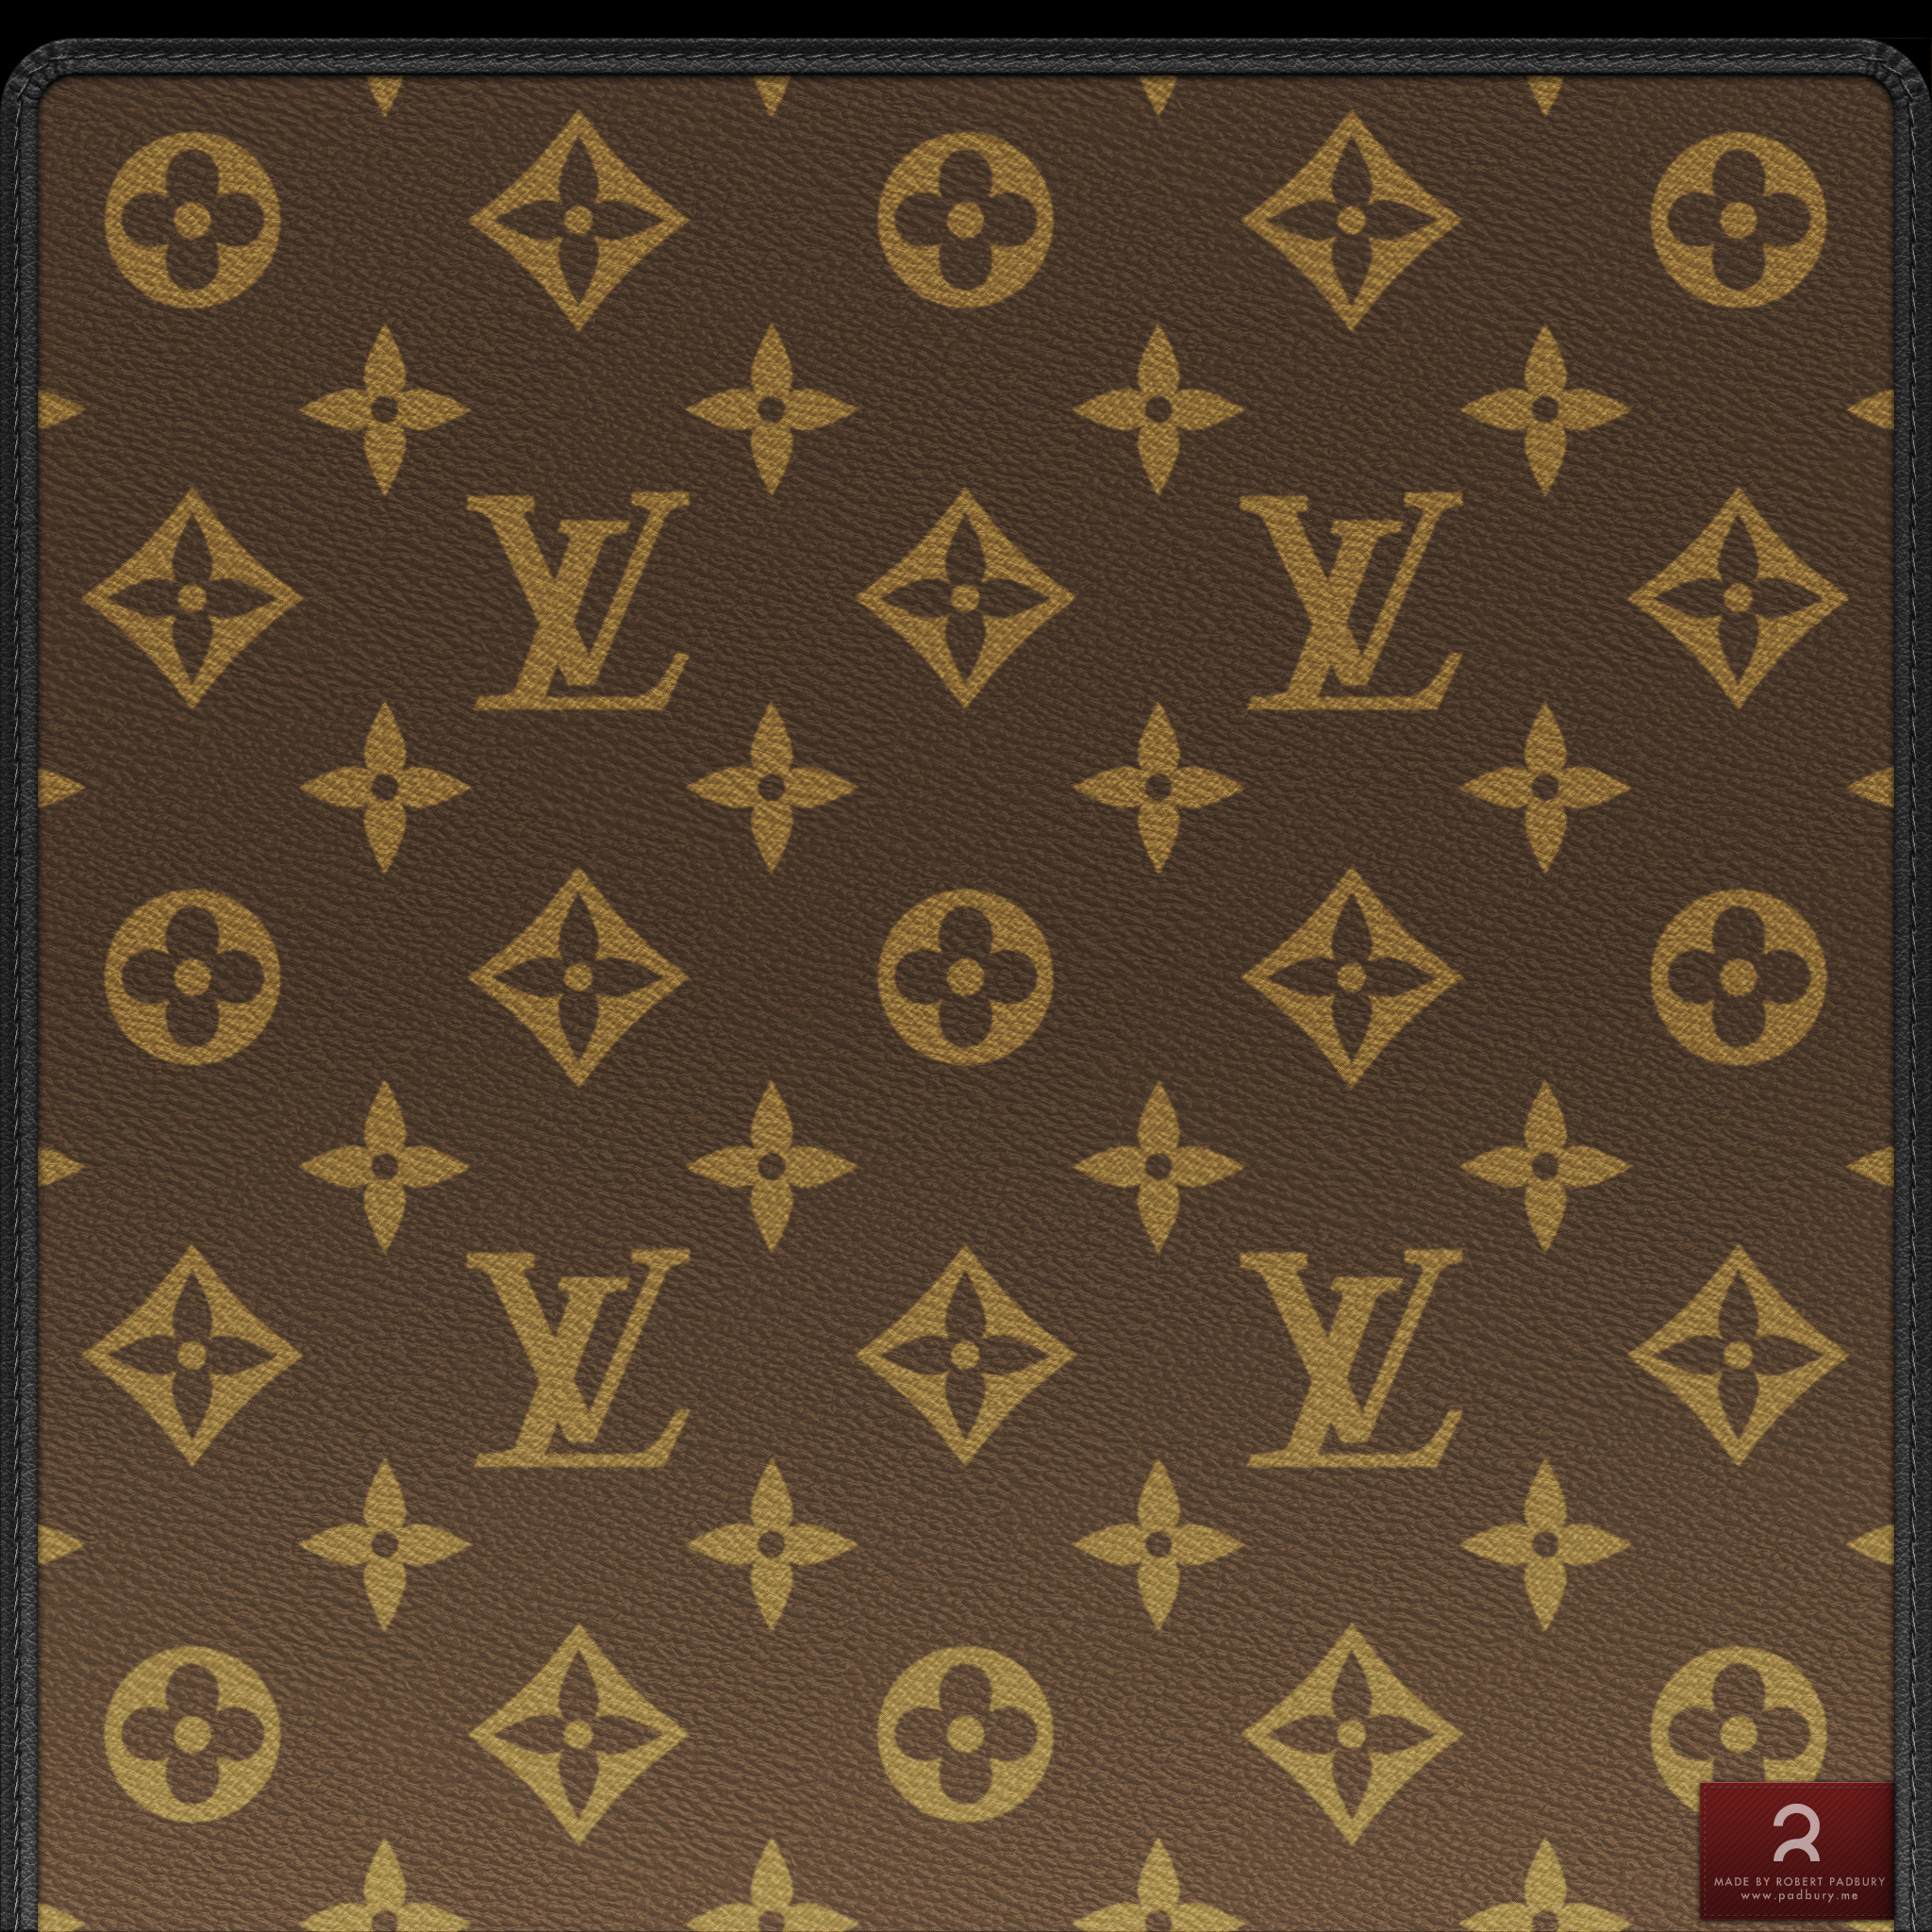 Louis Vuitton Pattern Wallpapers - Top Free Louis Vuitton Pattern